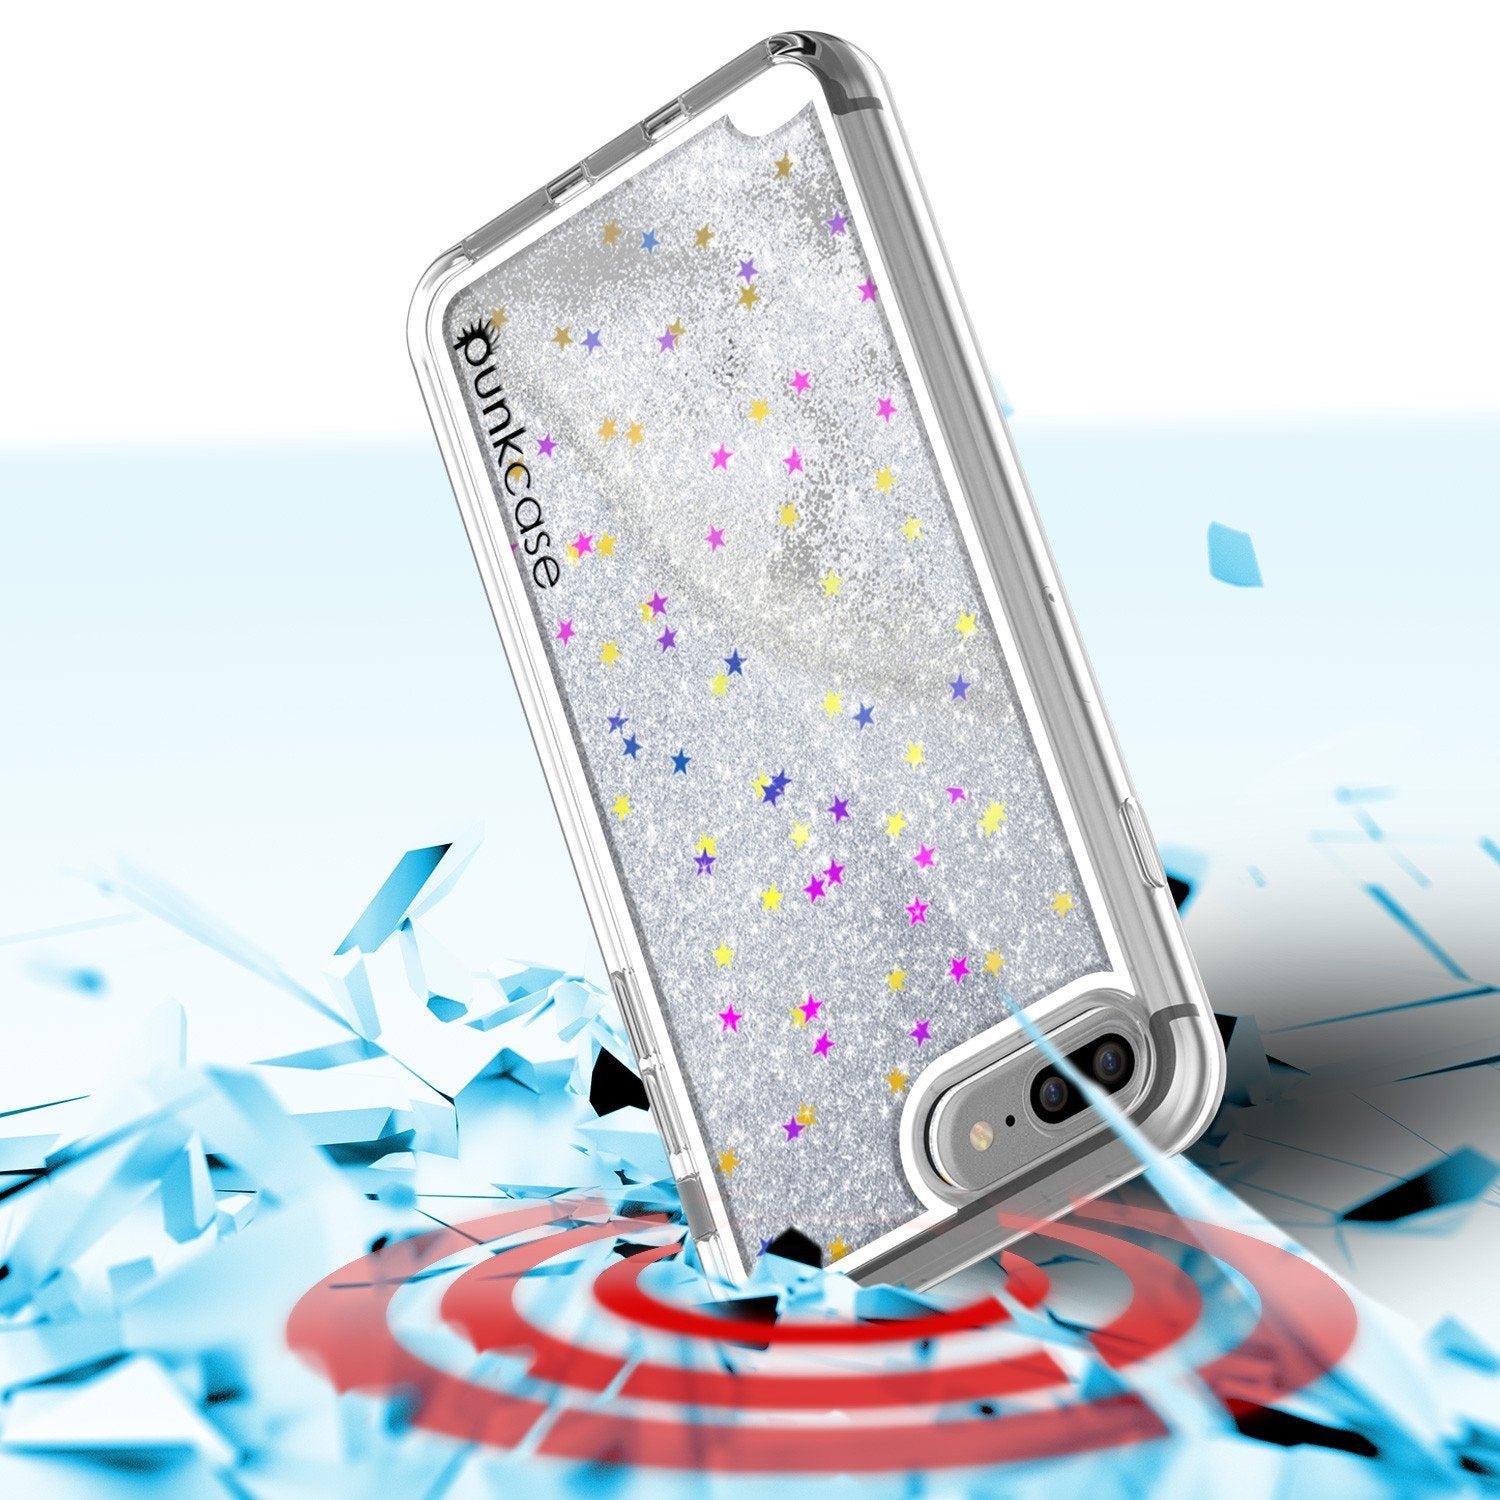 iPhone 8+ Plus Case Punkcase Liquid Silver Glitter Cover Series